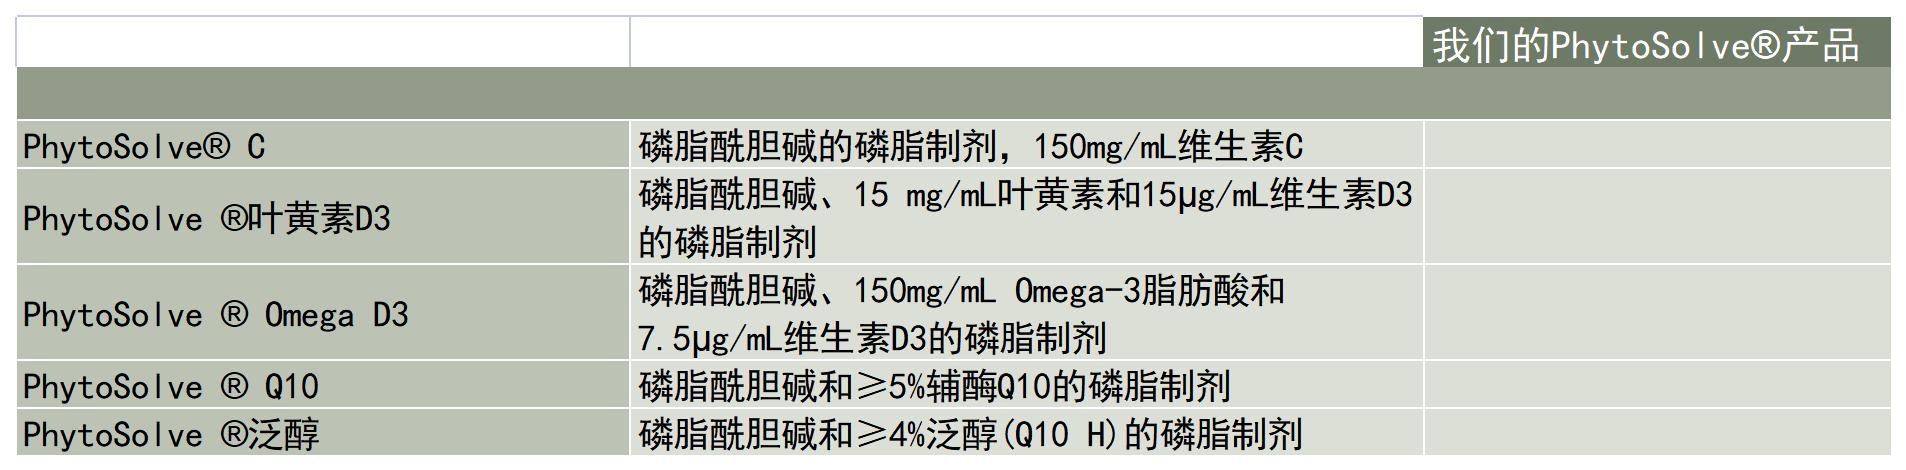 Lipoid-产品-磷脂系统-PhytoSolve-产品列表_A1C7.jpg